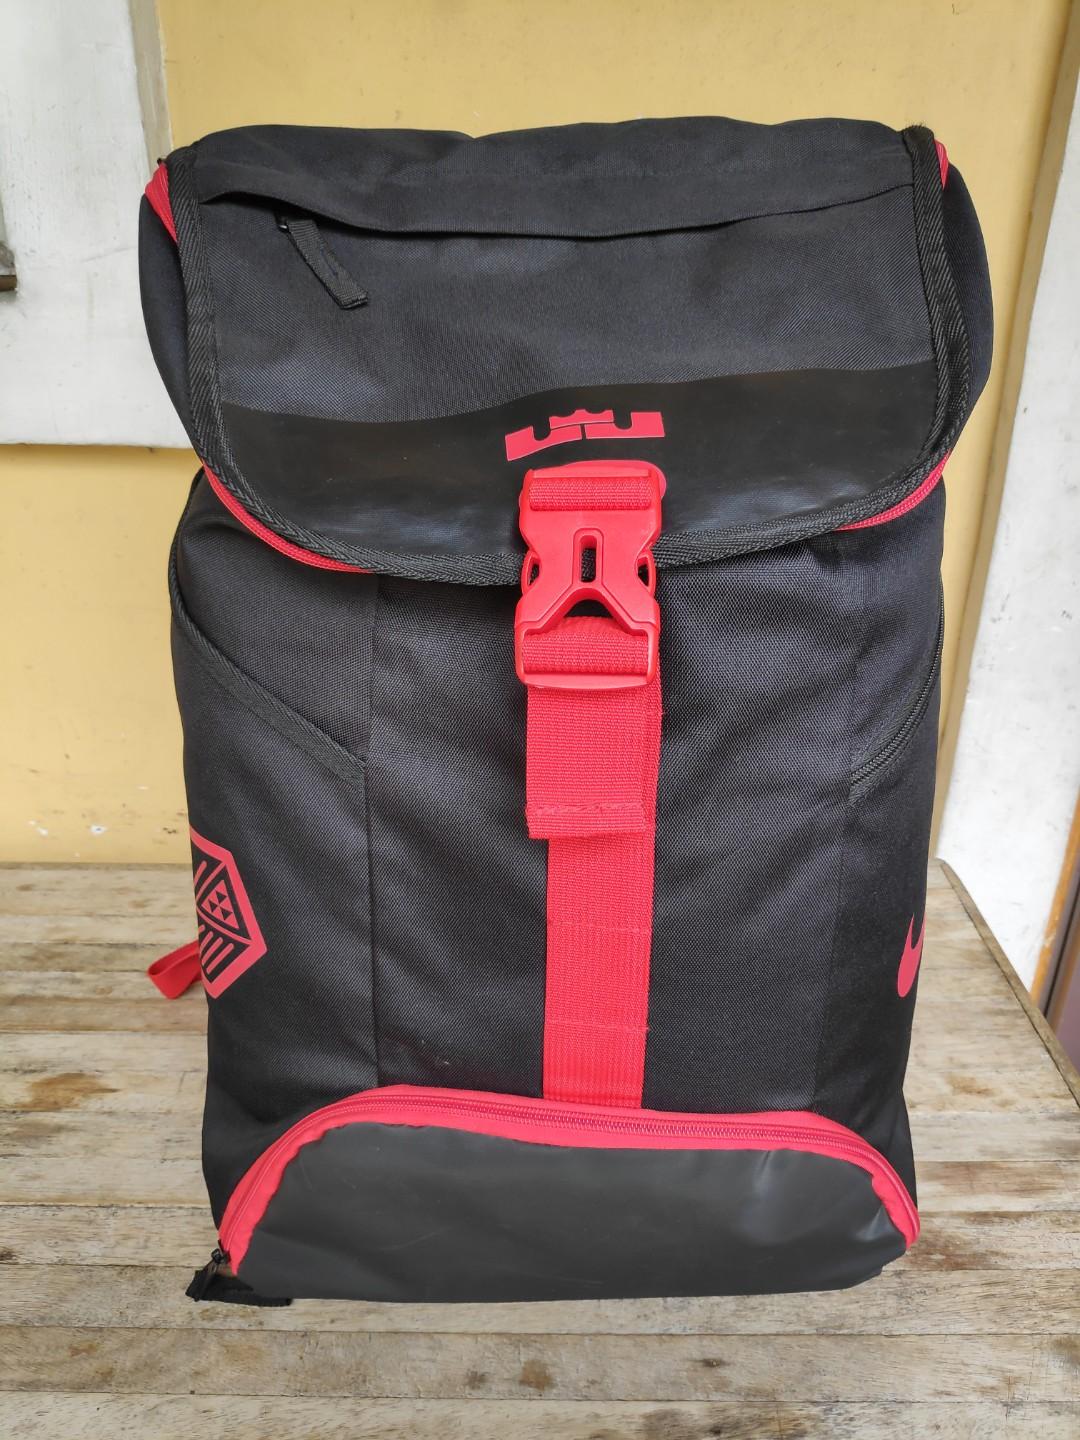 lebron ambassador 2.0 backpack